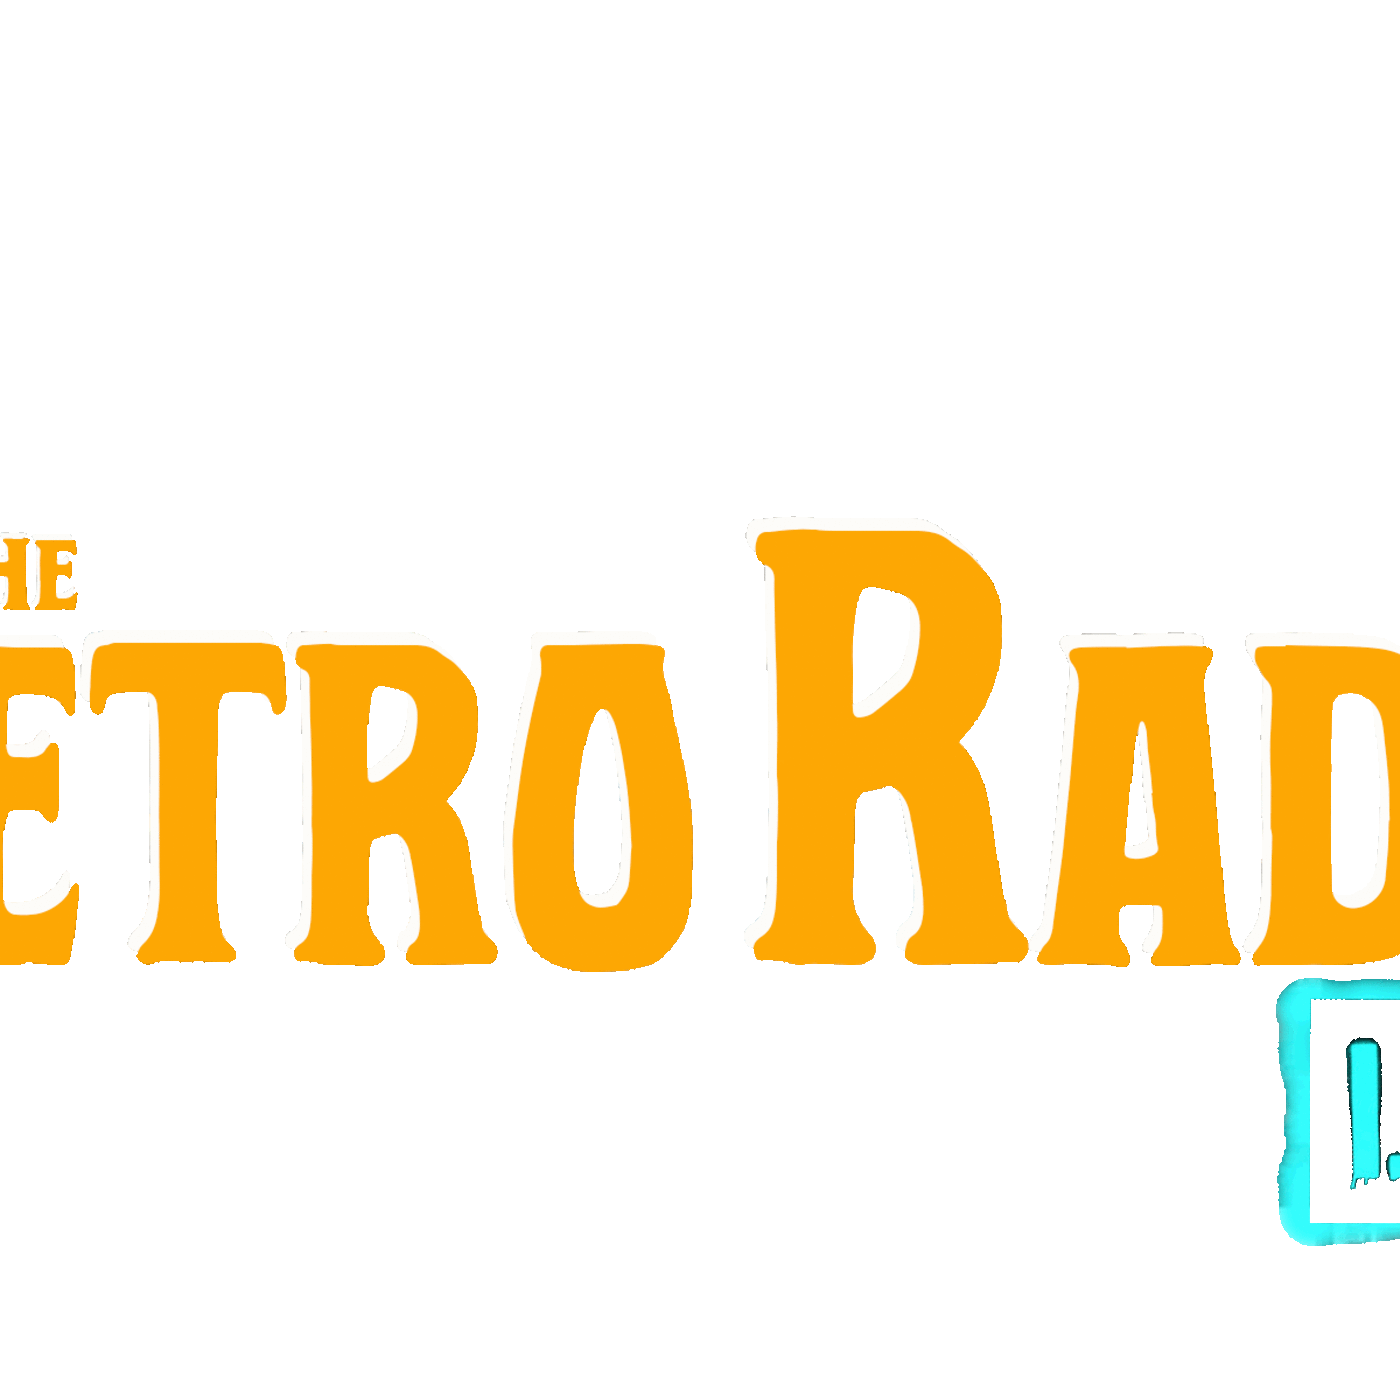 Retro Radio Live's Podcast®